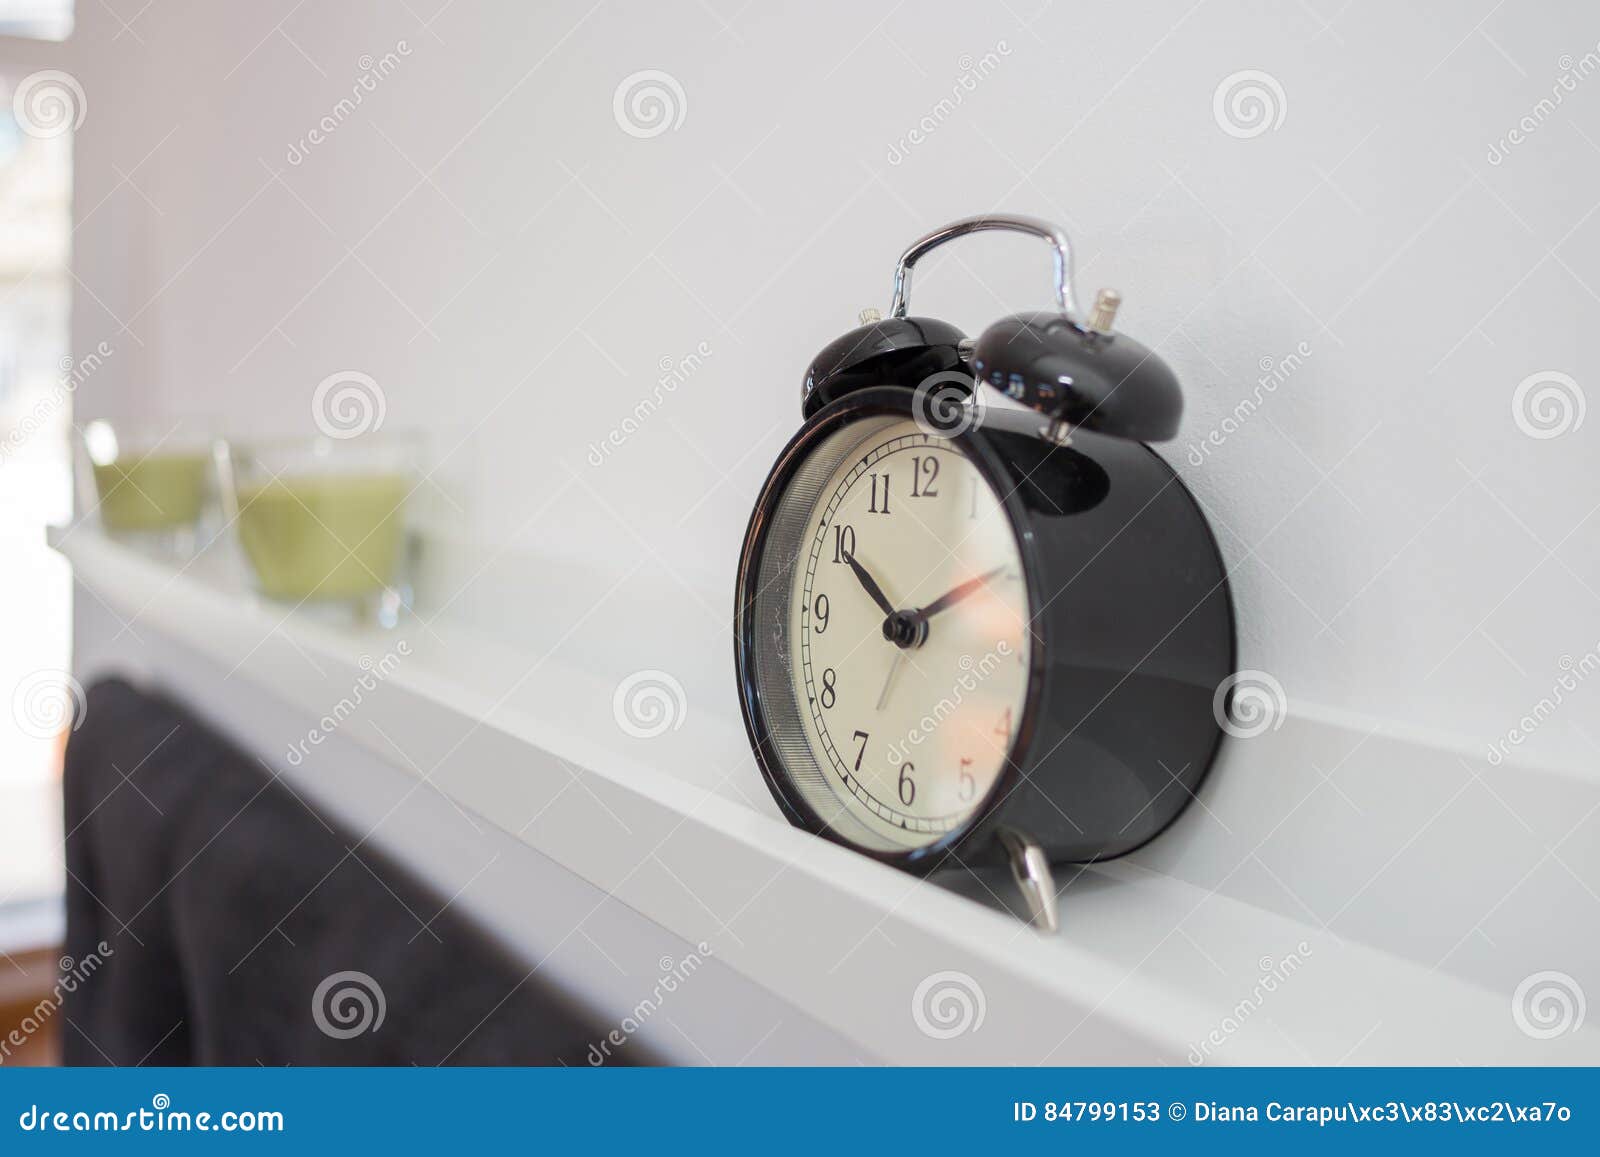 alarm clock on a shelve